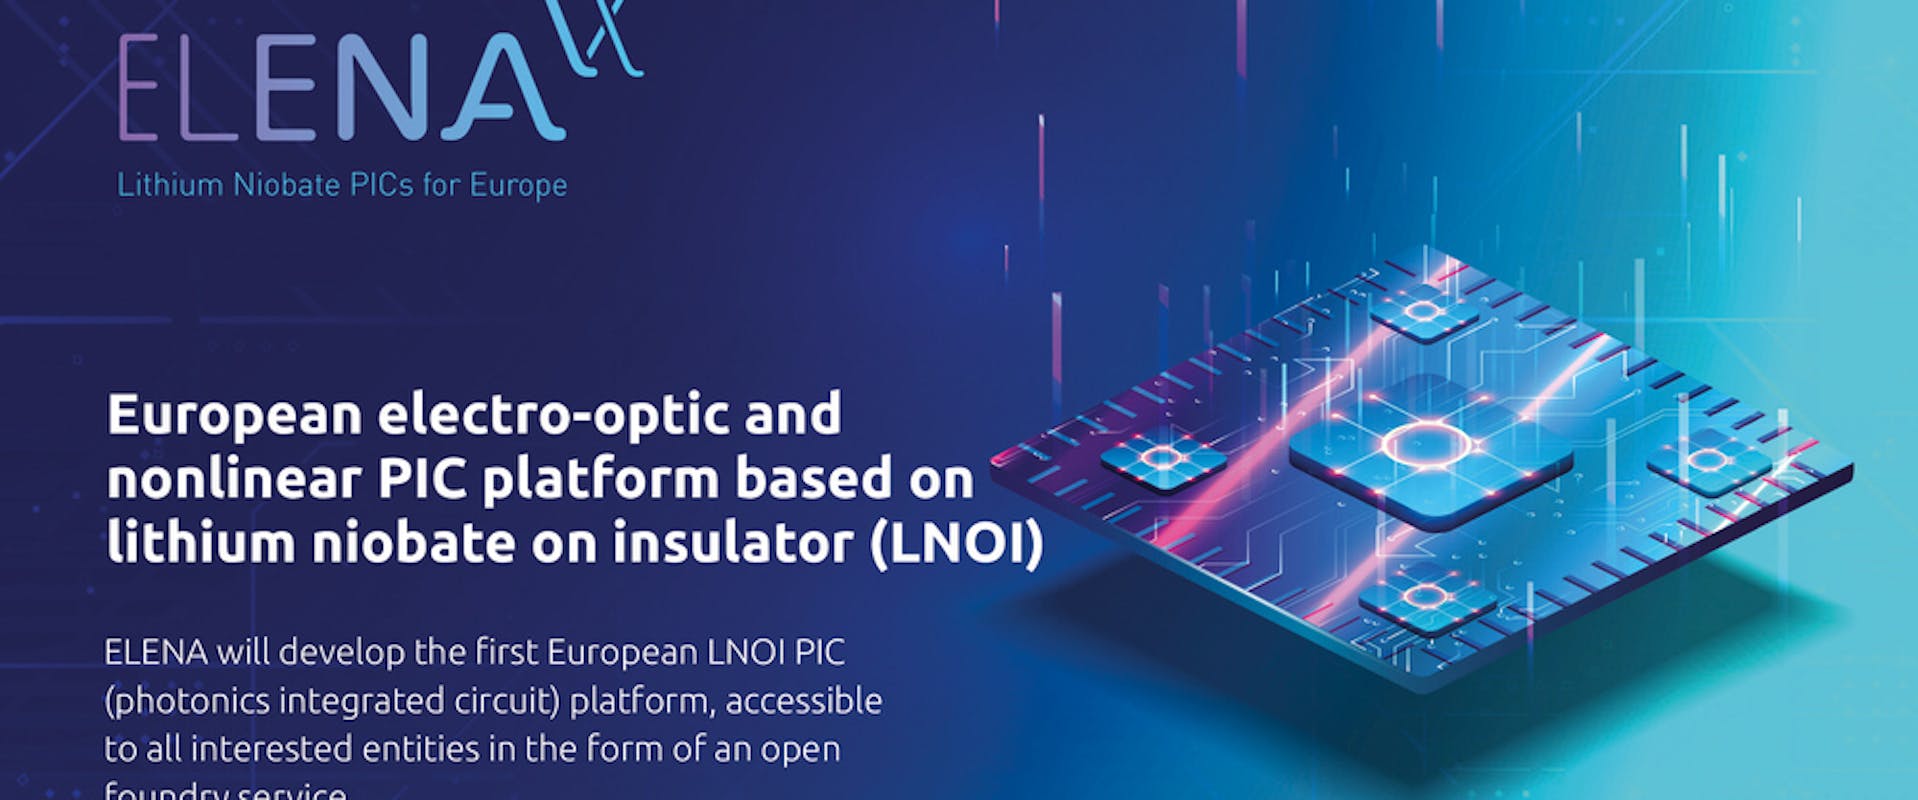 LNOI chips fabricated at CSEM